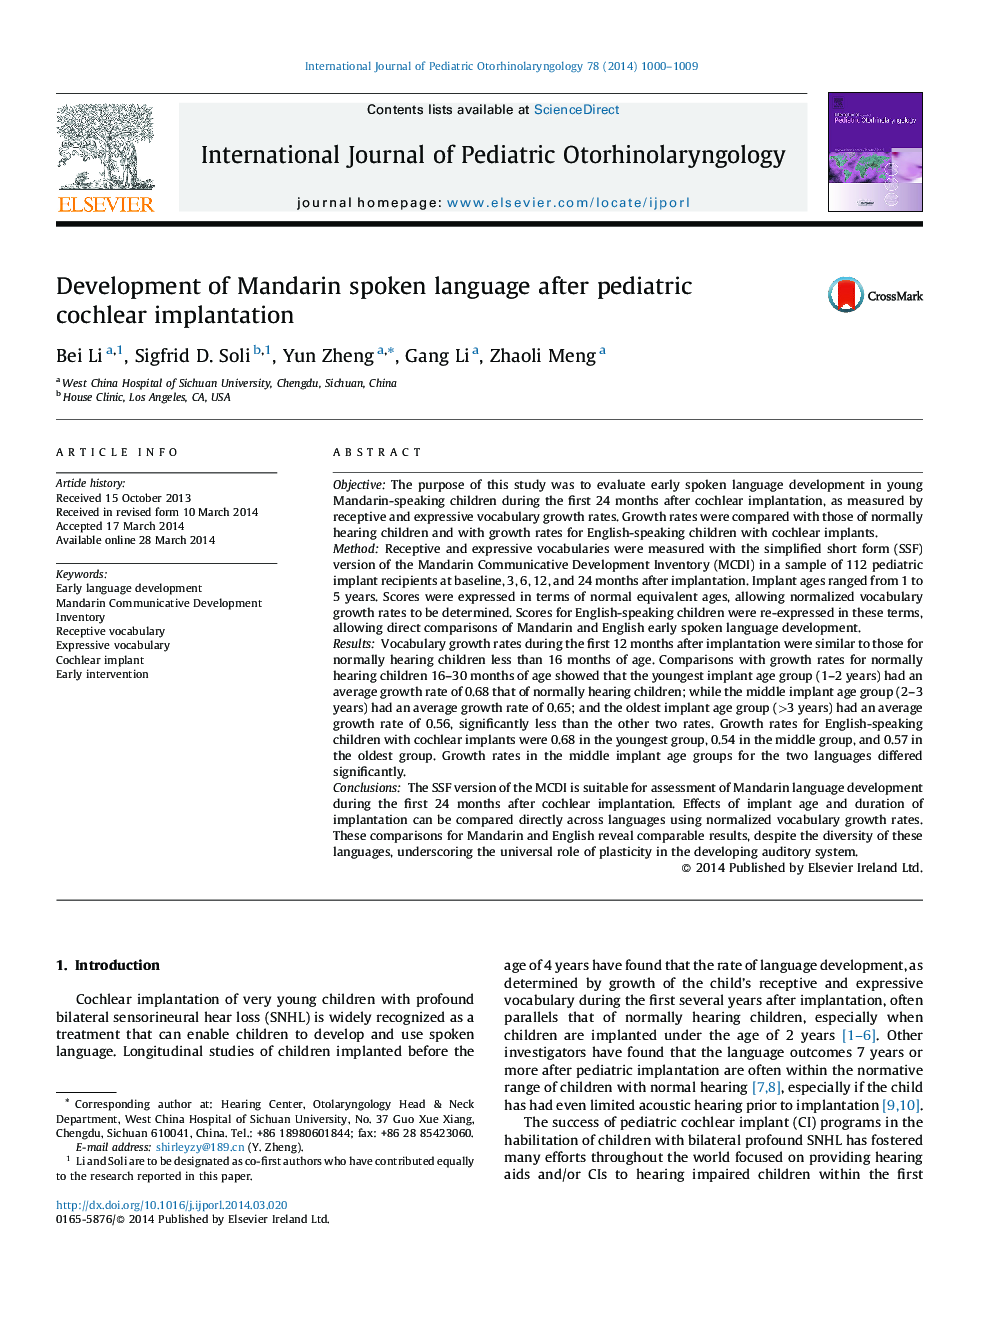 Development of Mandarin spoken language after pediatric cochlear implantation